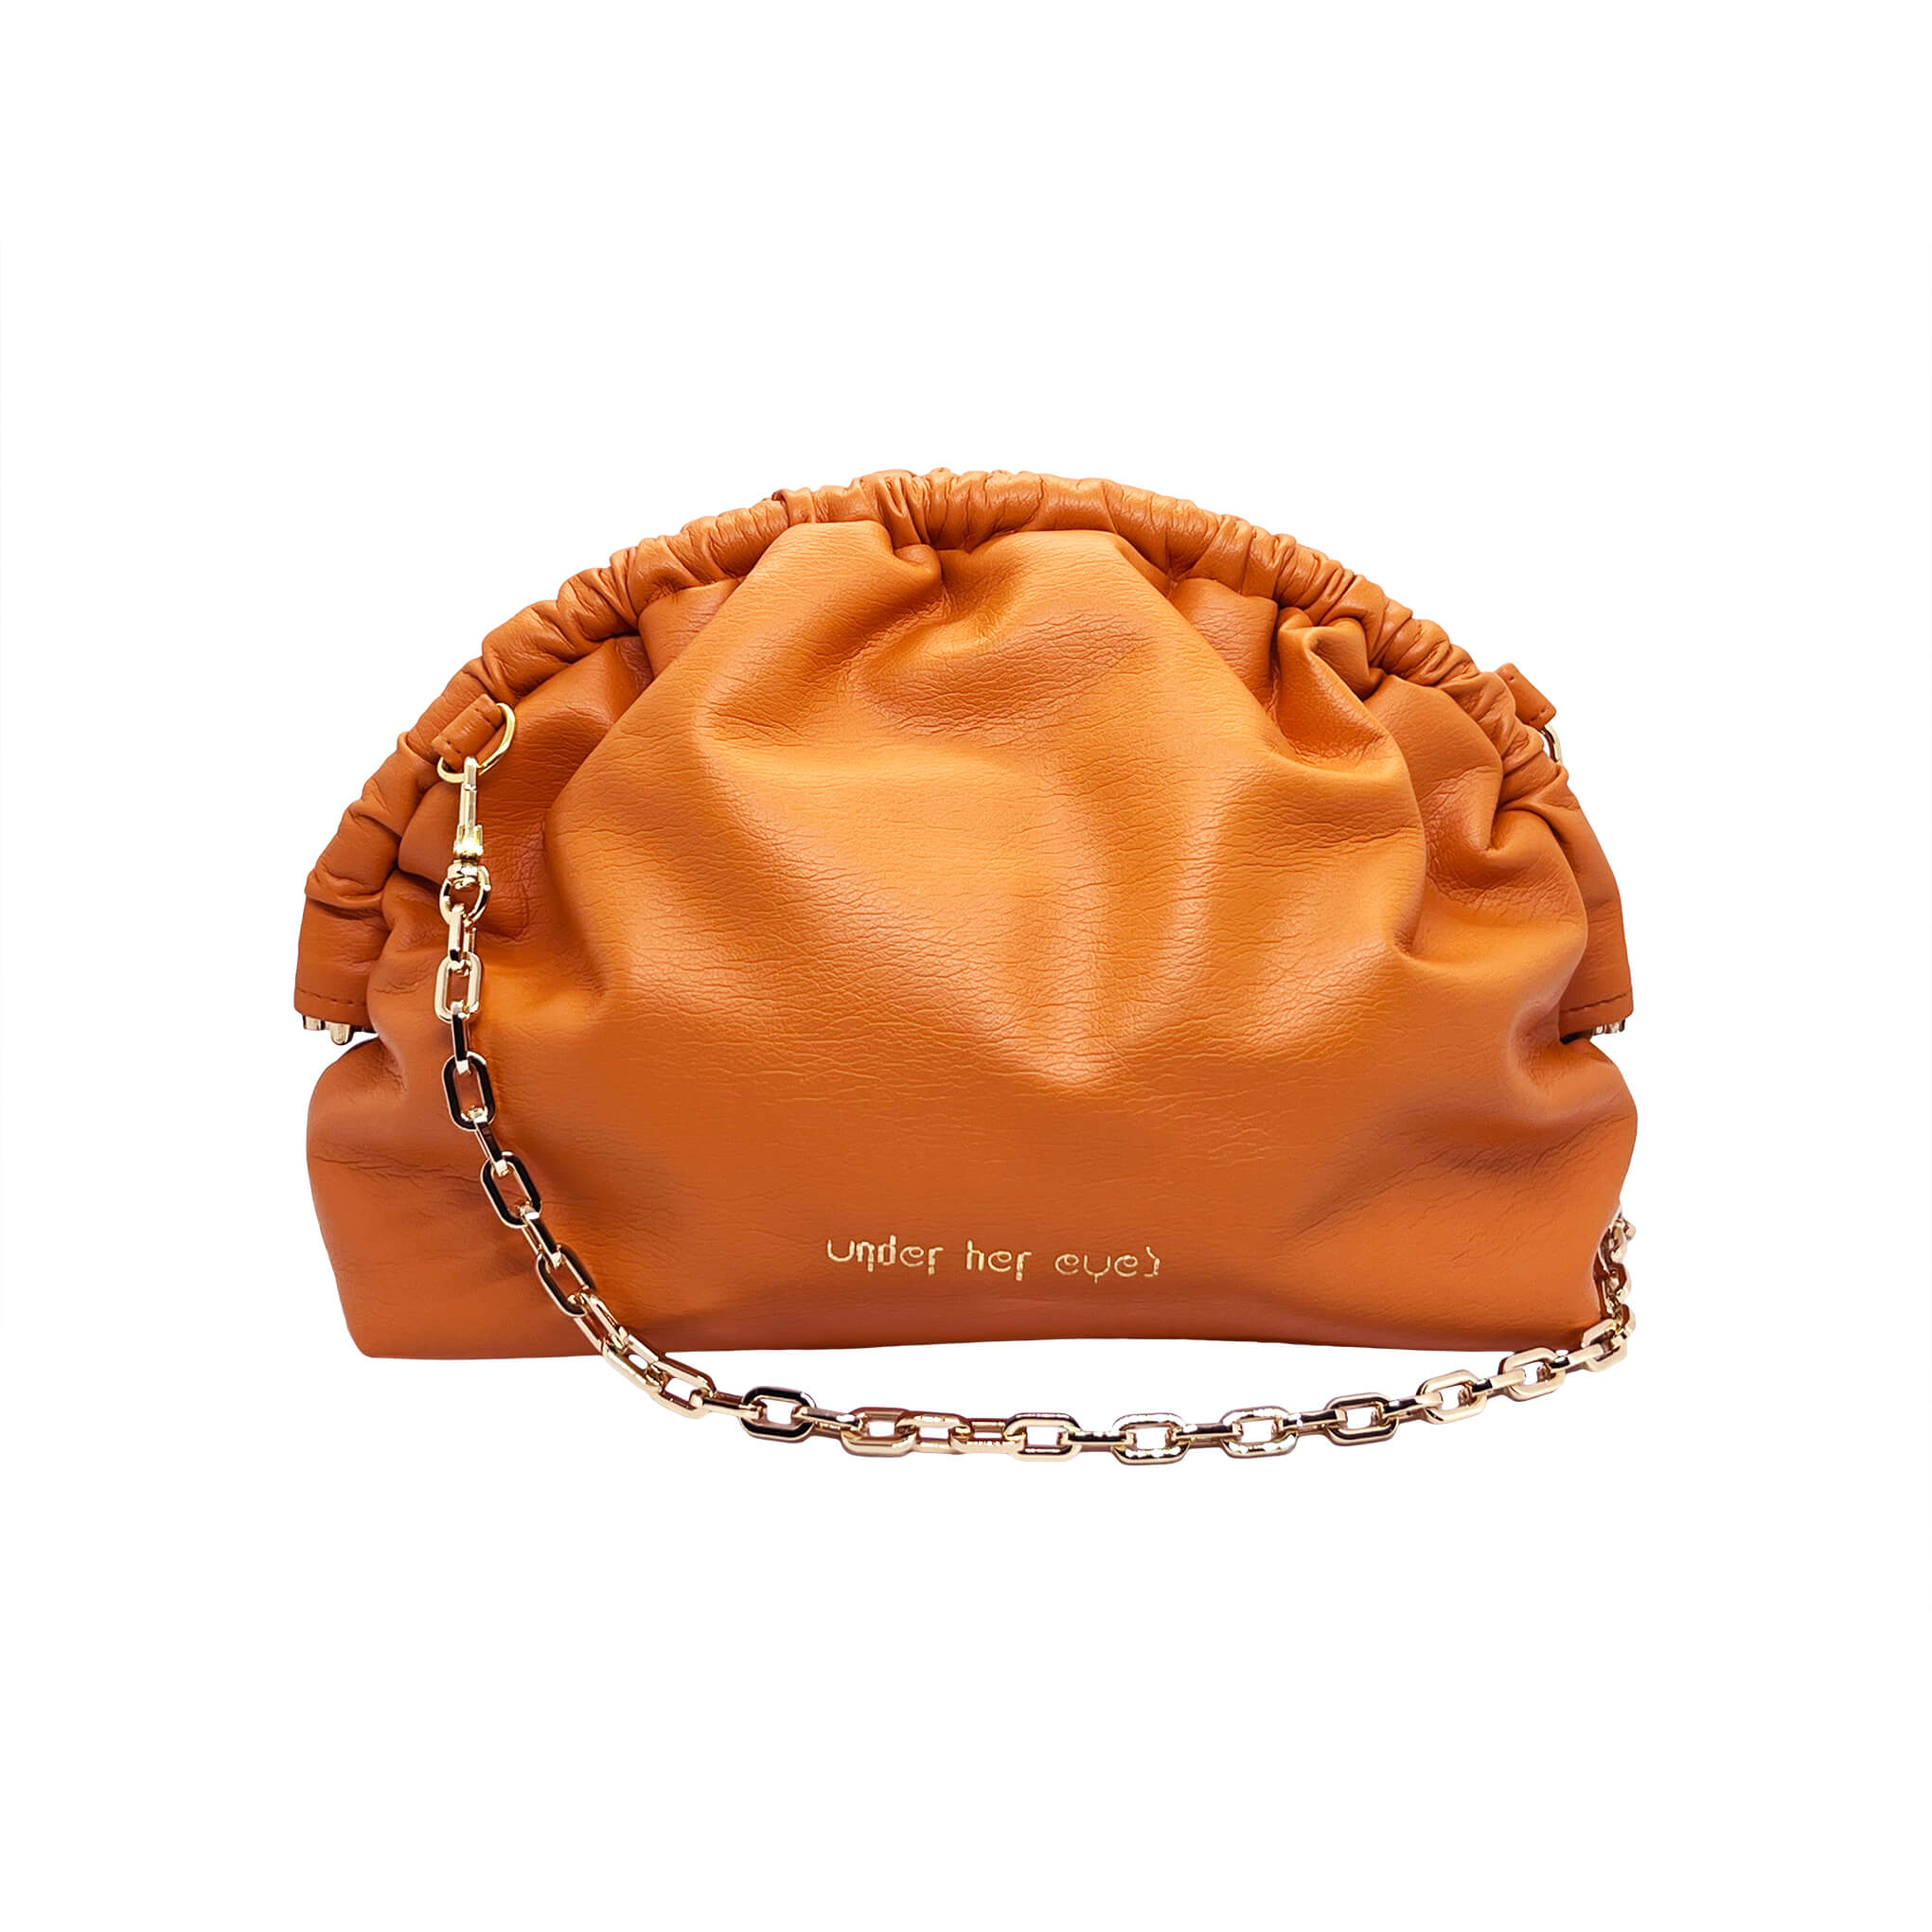 Product picture of Under Her Eyes Norma Large Clutch, Shoulder & Cross Body Bag in Vintage Orange